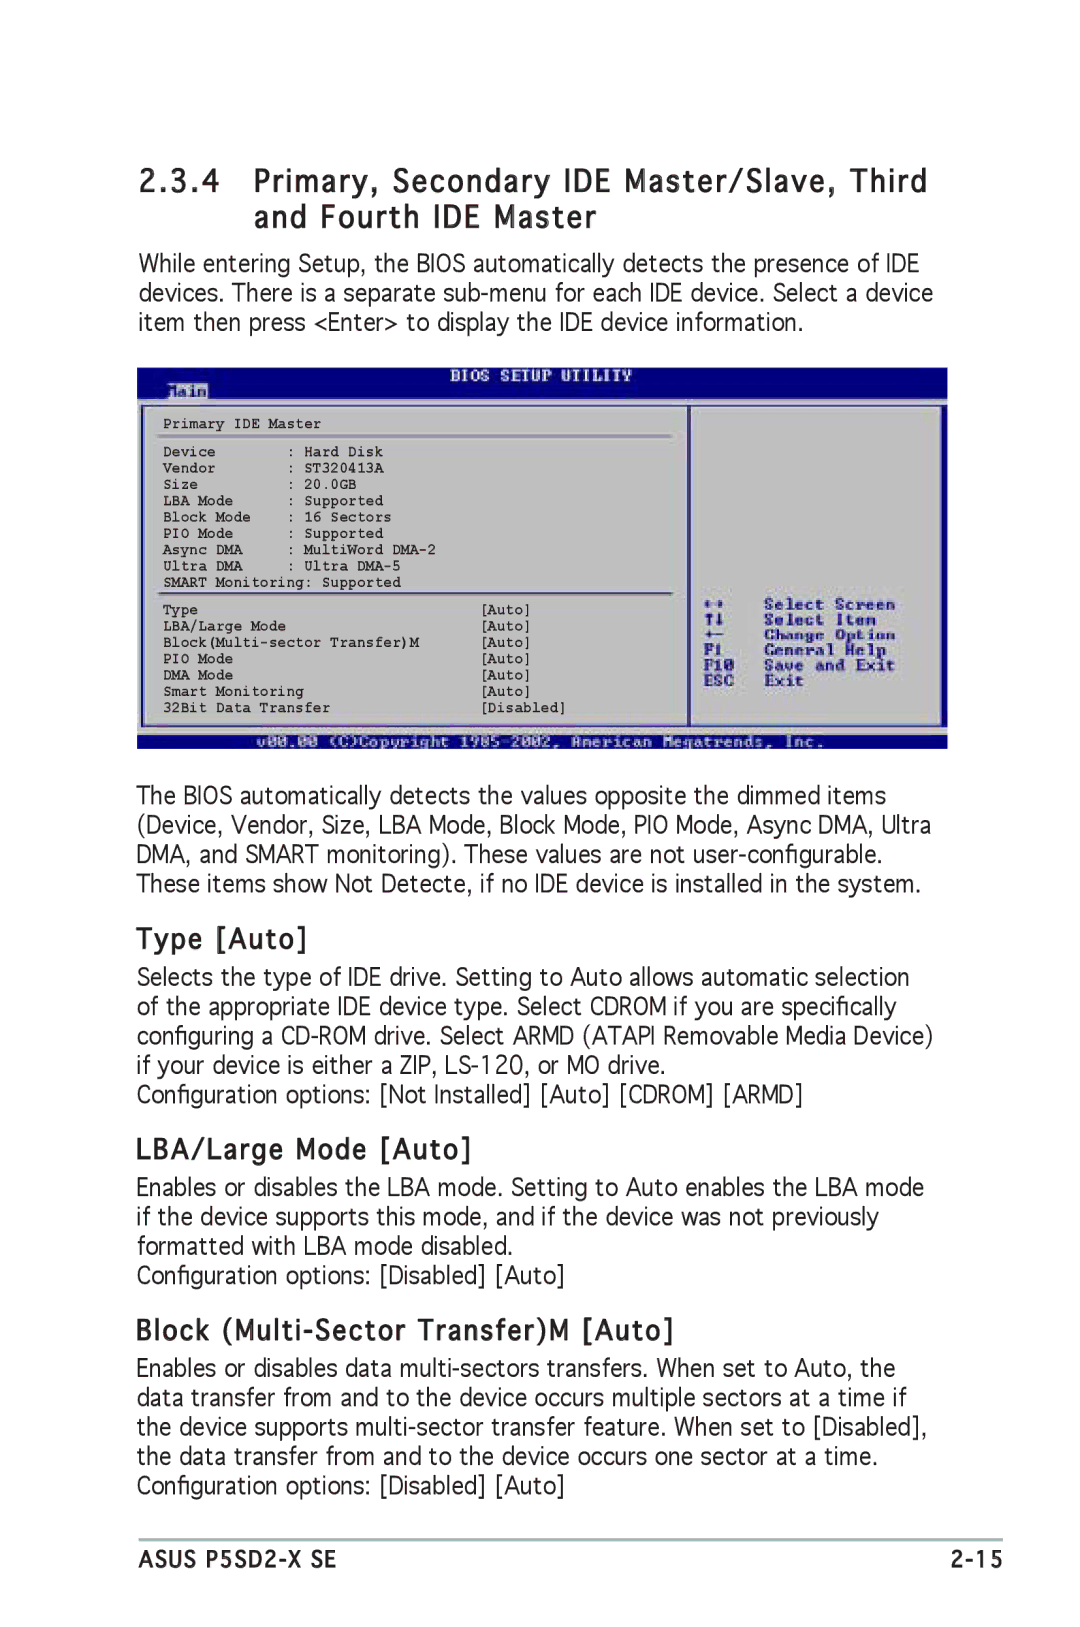 Asus P5SD2-X SE manual Type Auto, LBA/Large Mode Auto, Block Multi -Sector TransferM Auto 